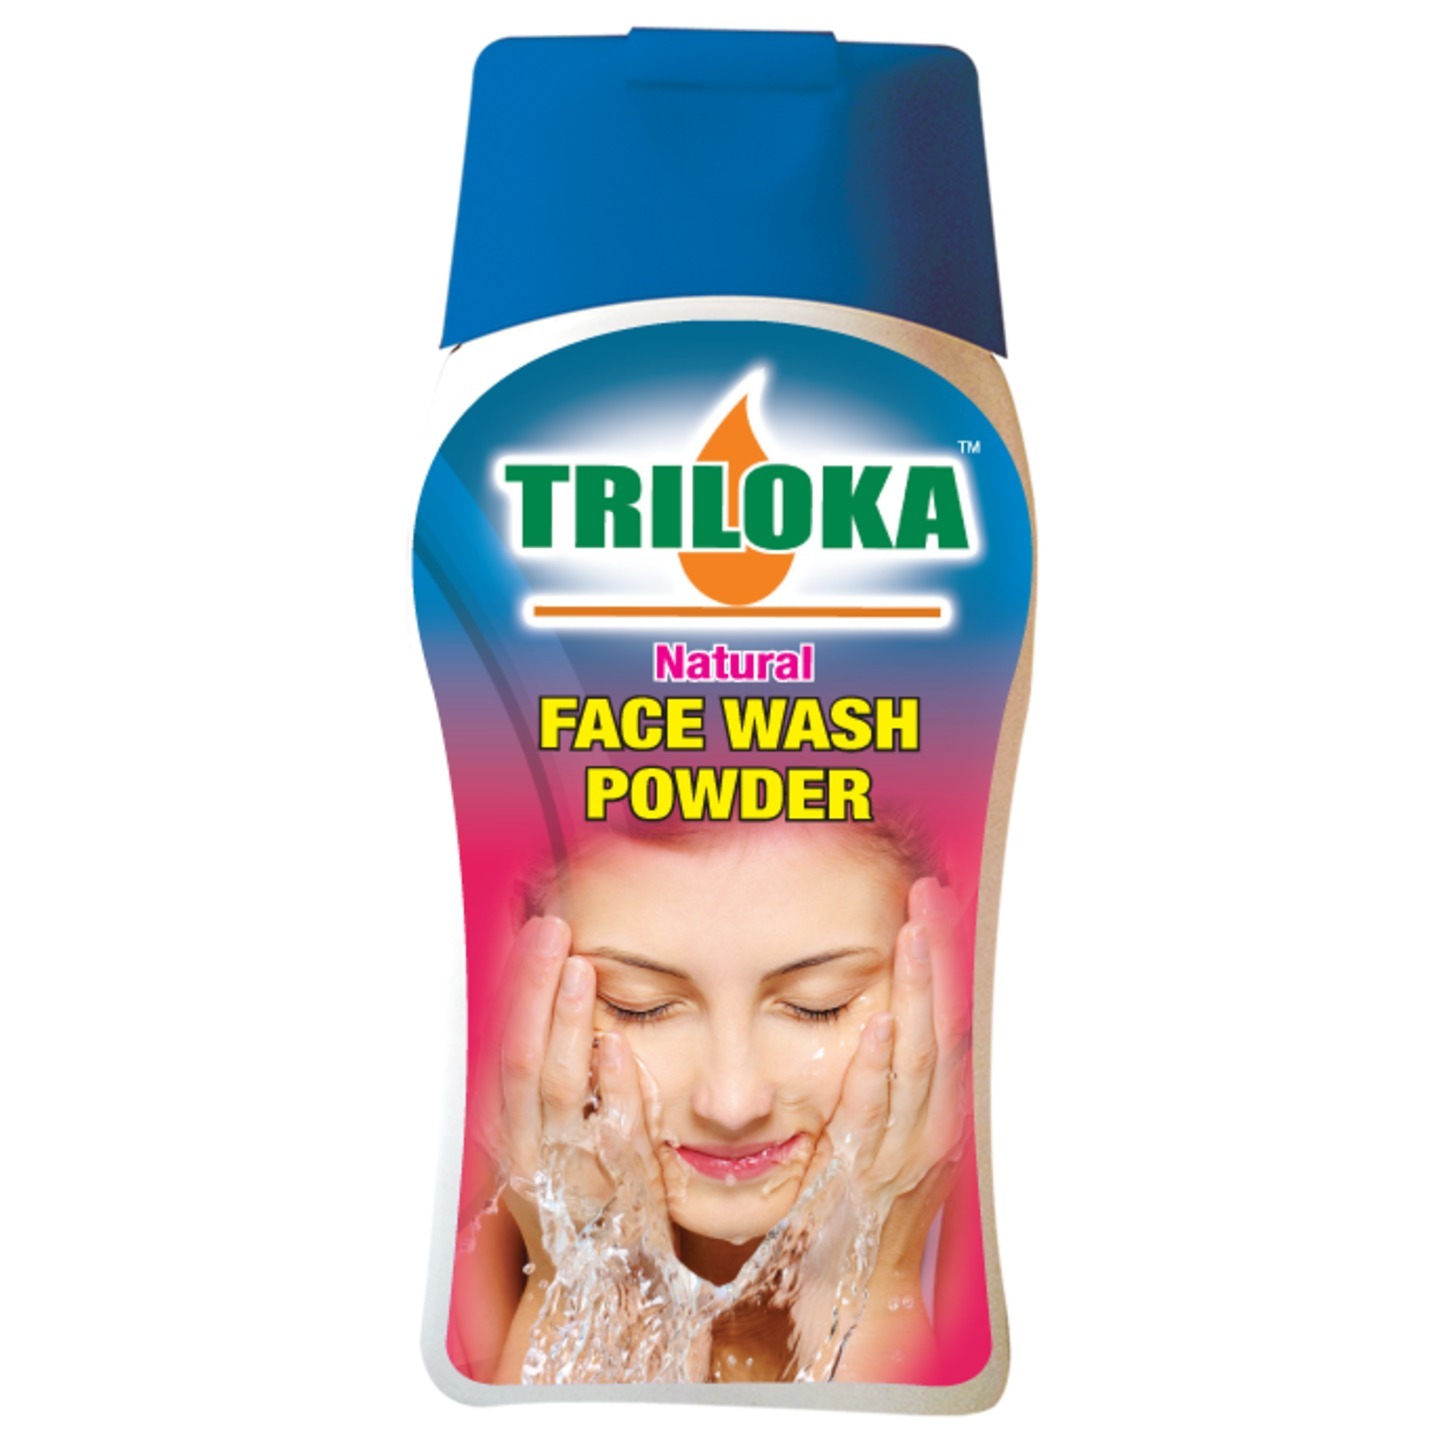 New Triloka  Natural Face Wash Powder(  Powder Bottles ) - 1 Dozen